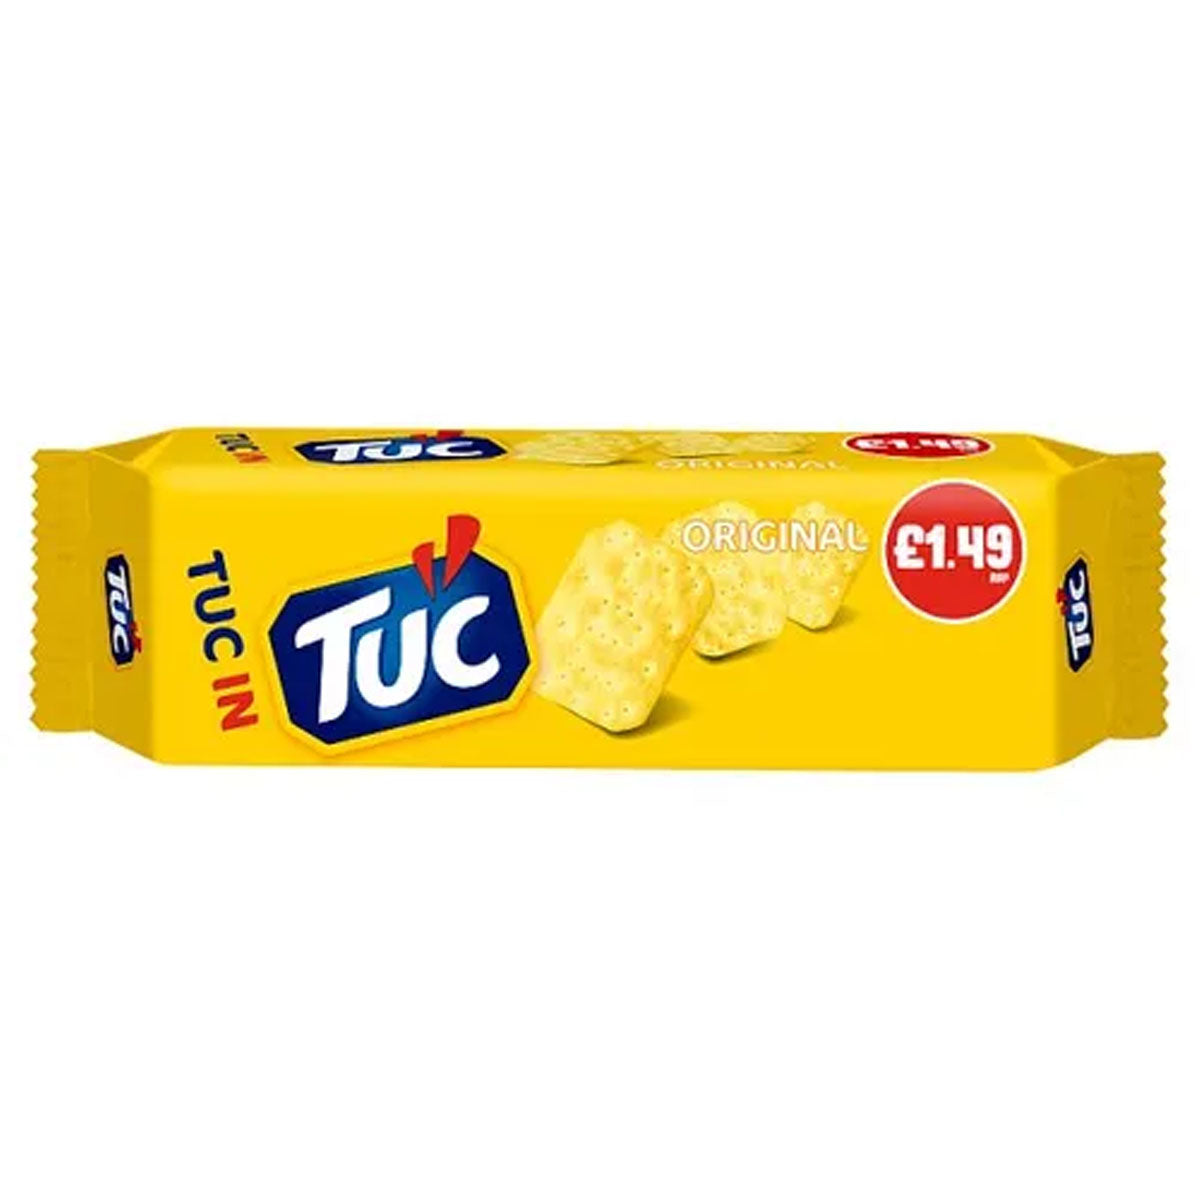 Tuc - Original - 150g - Continental Food Store